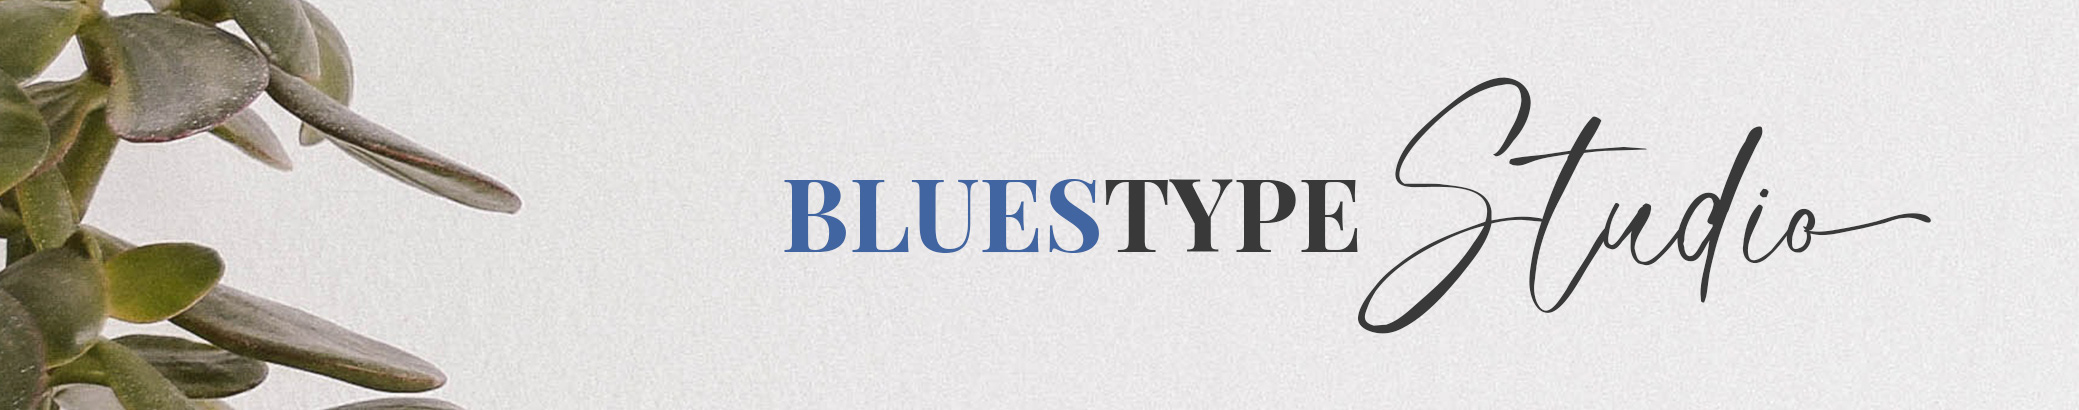 Bluestype Studio's profile banner